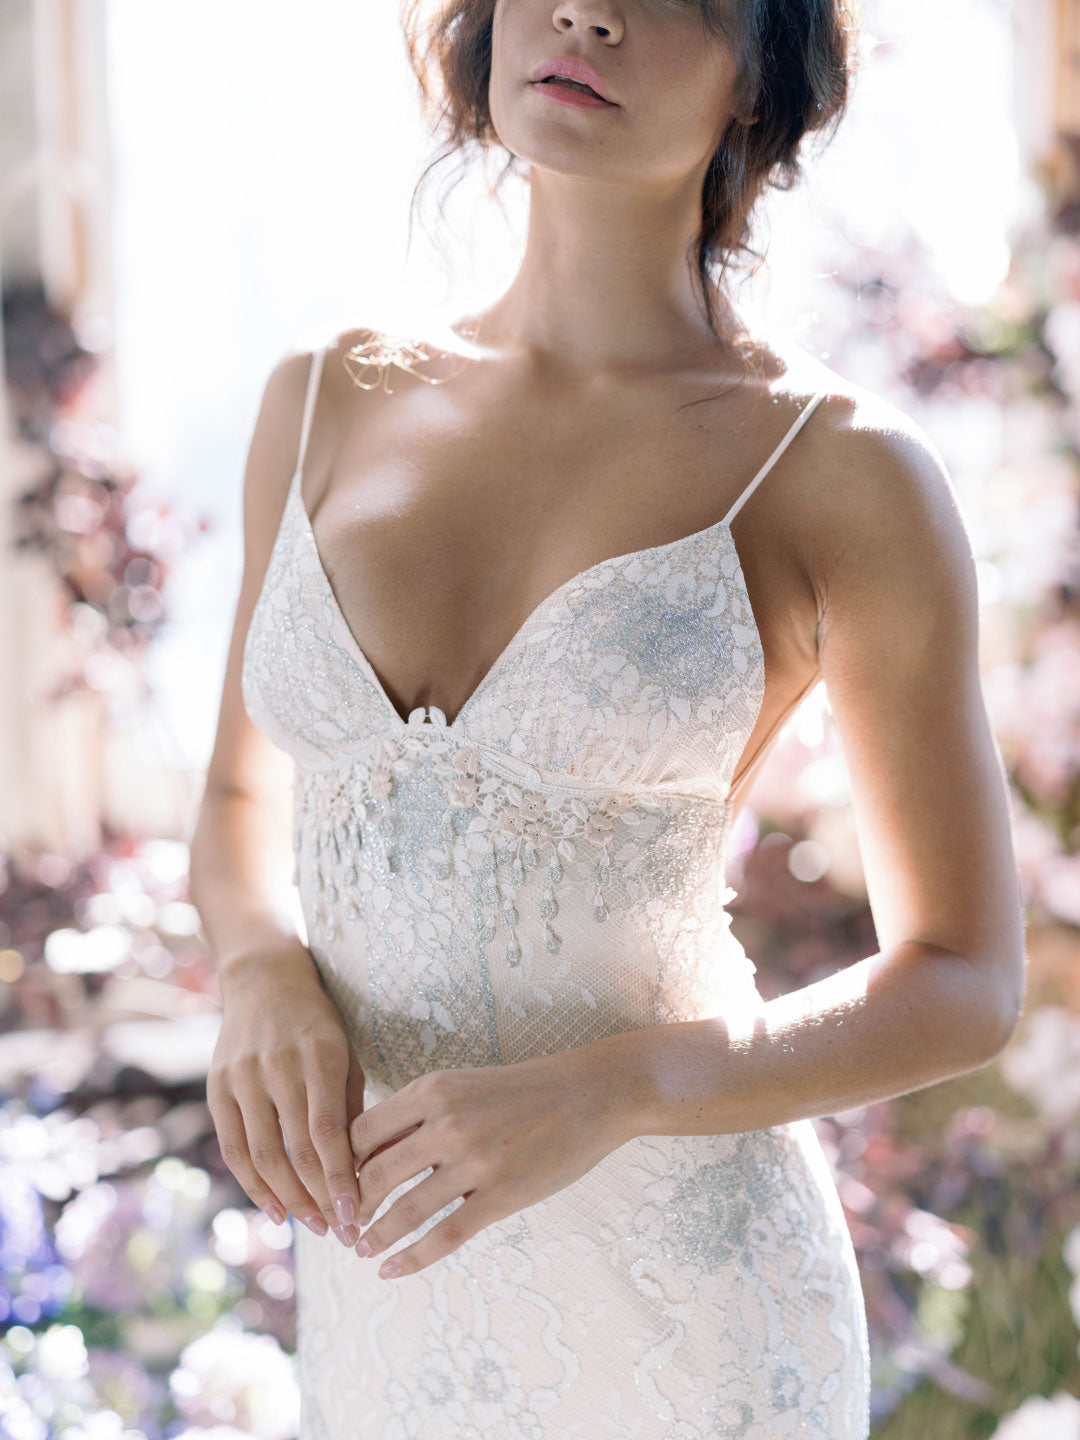 Briolette Couture Wedding Dress by Claire Pettibone